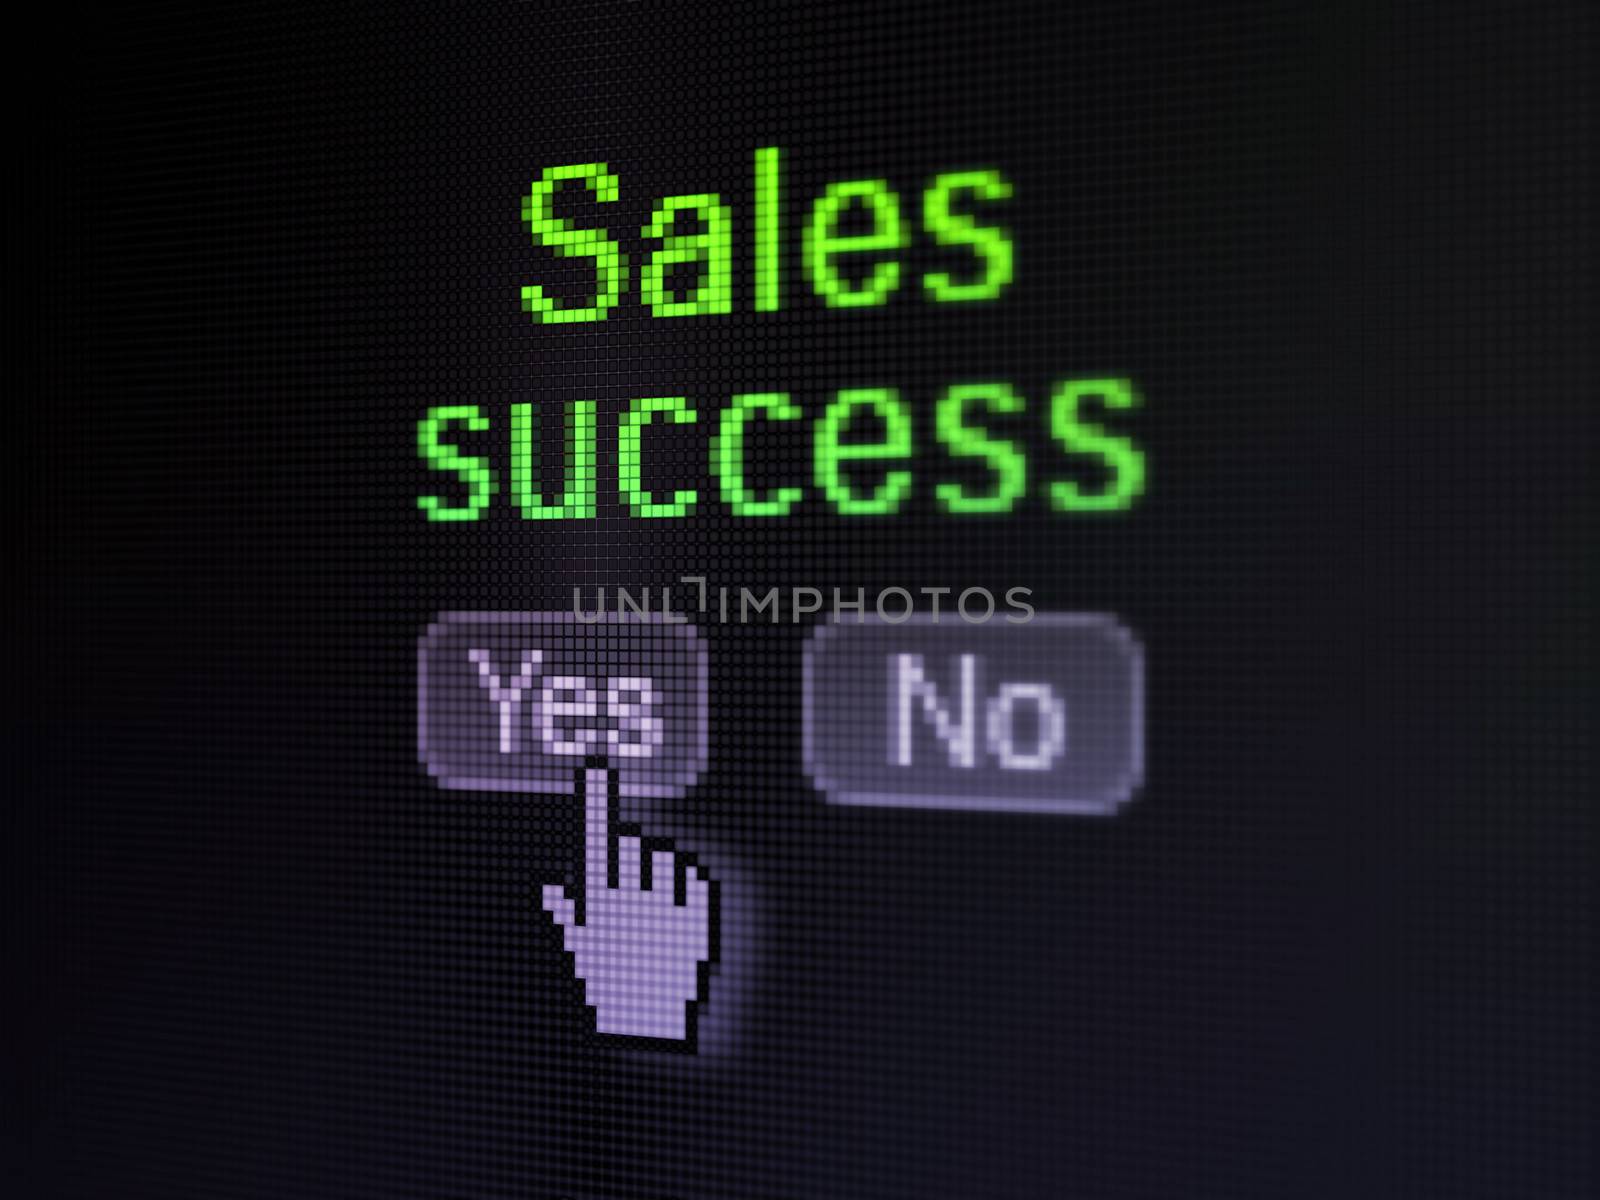 : Sales Success on digital computer screen by maxkabakov